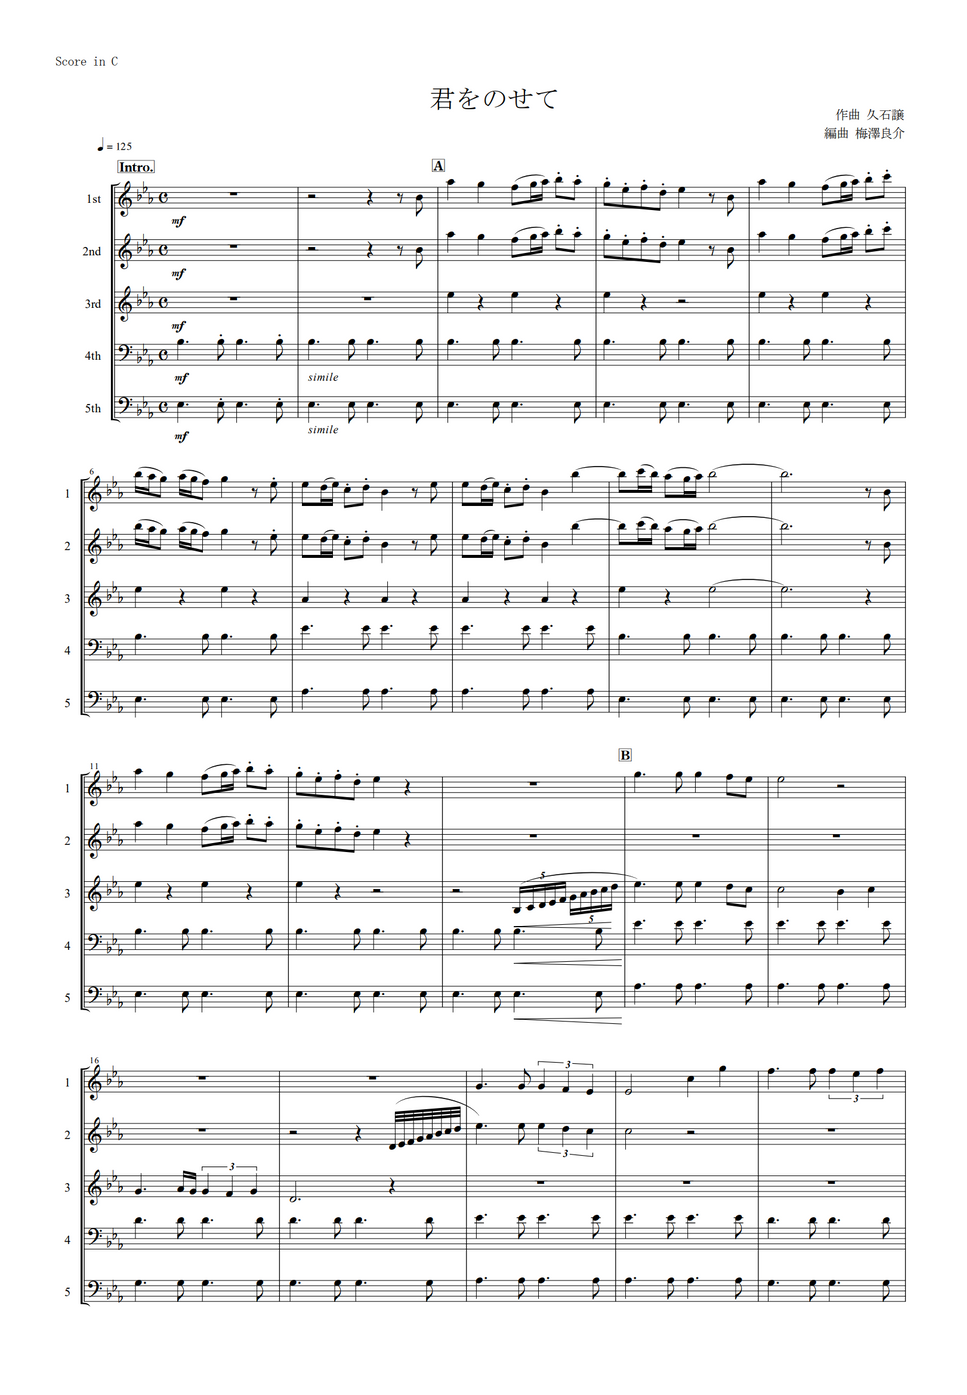 NEW 金管五重奏 楽譜 ズーラシアンブラス 10曲セット | www